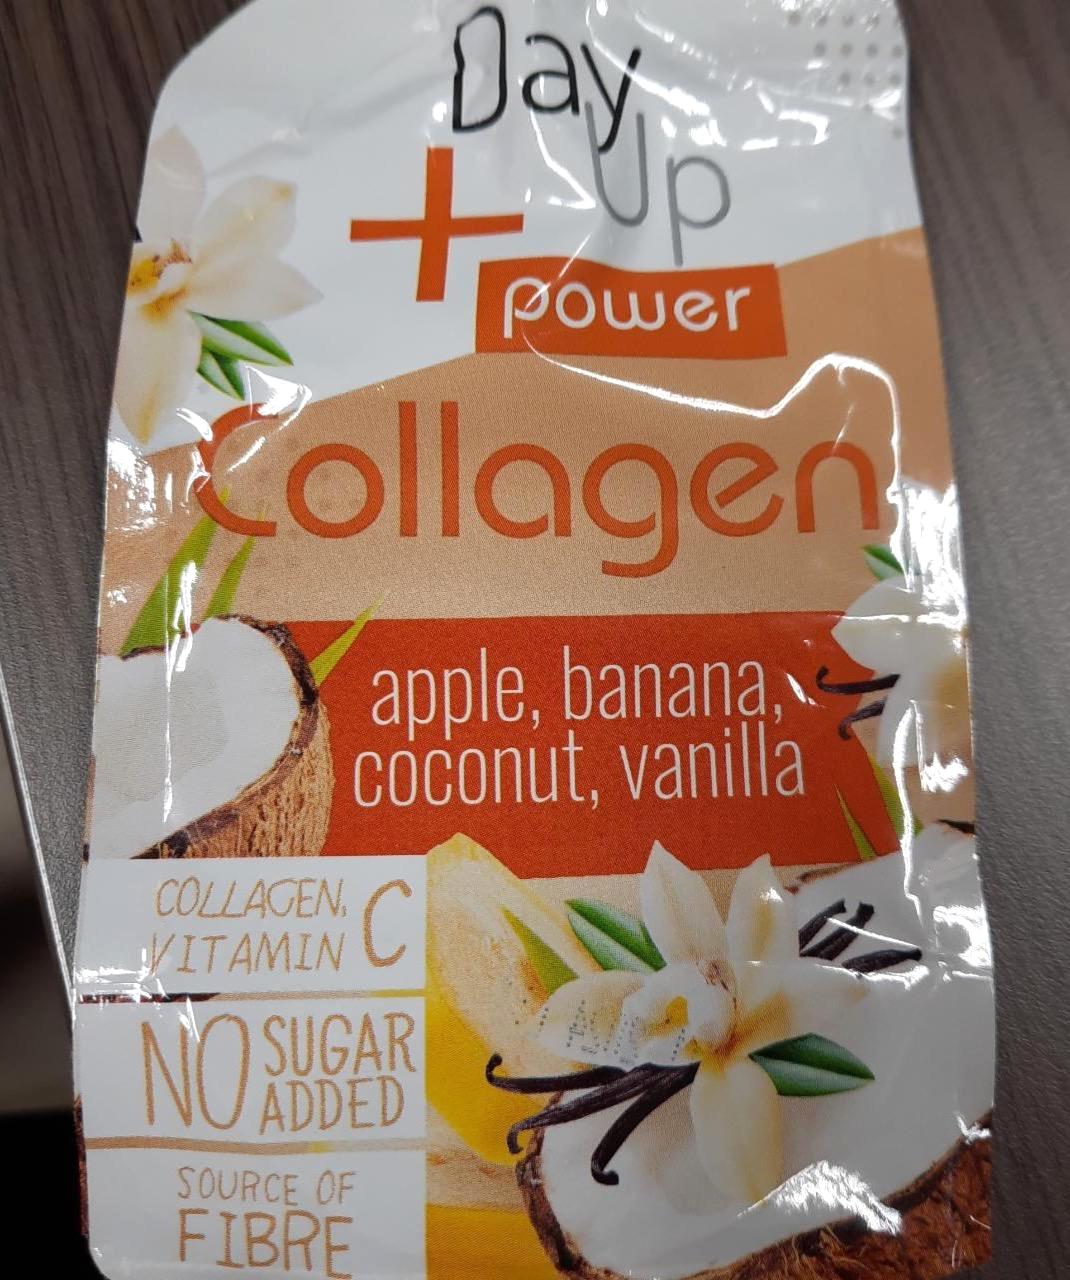 Képek - Power collagen apple, banana, coconut, vanilla Day up